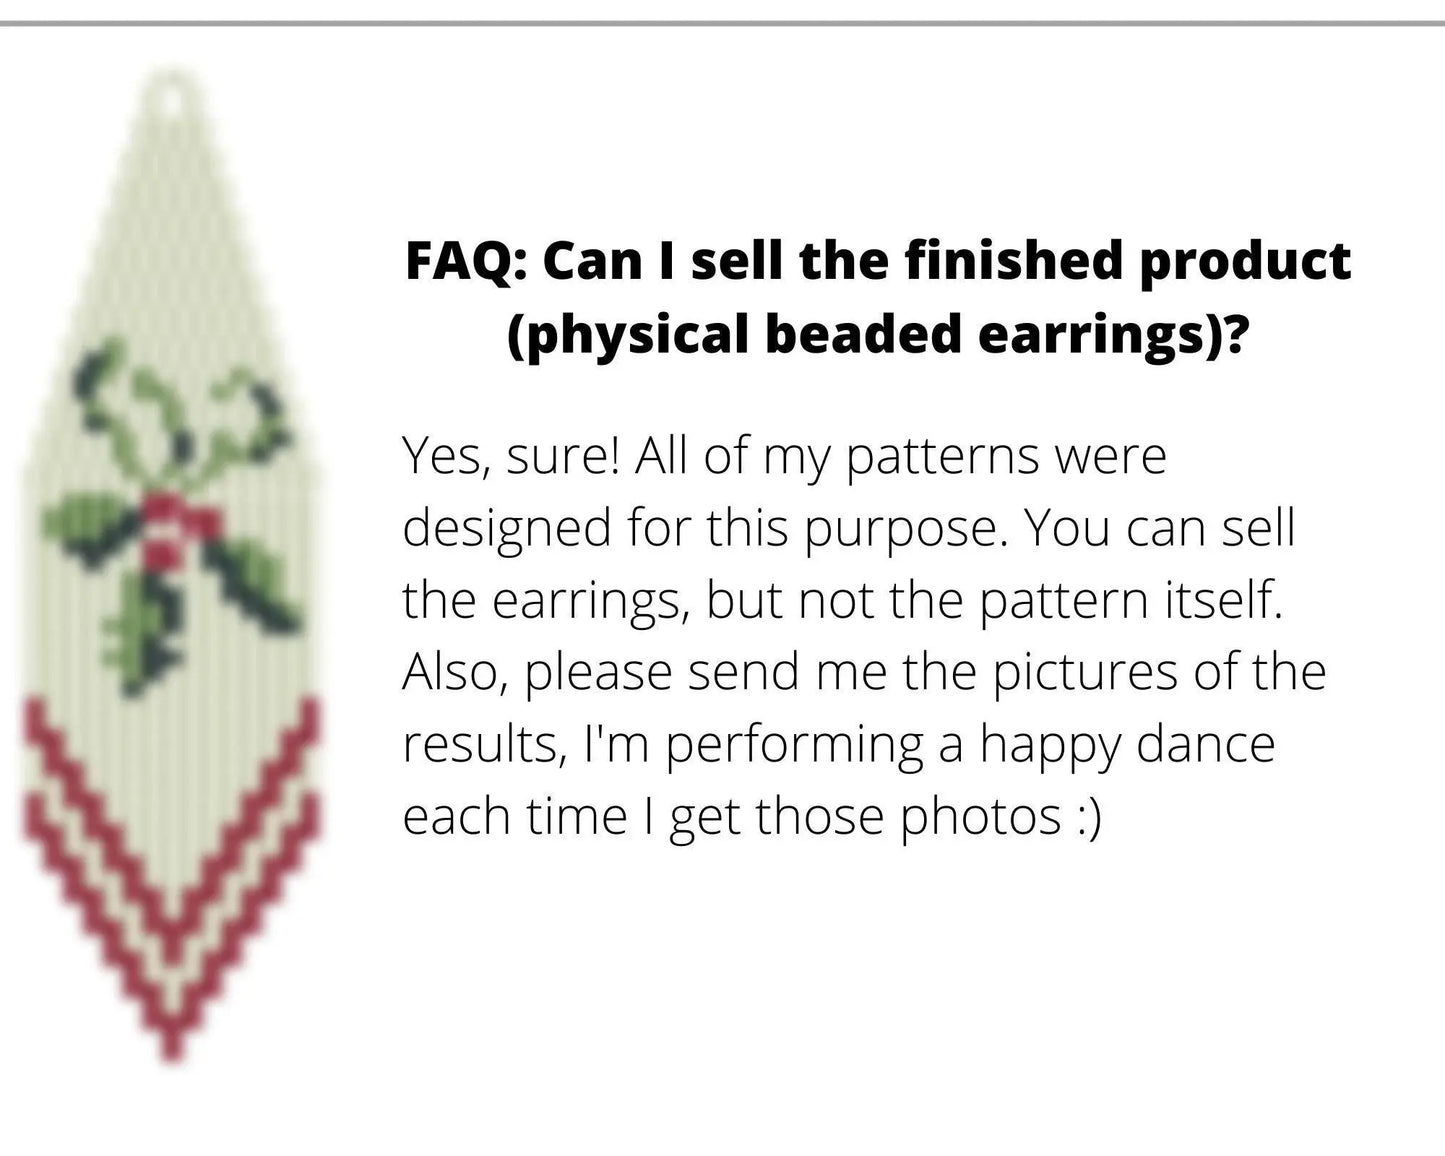 Christmas Holly Brick Stitch pattern for beaded fringe earrings - NikoBeadsUA